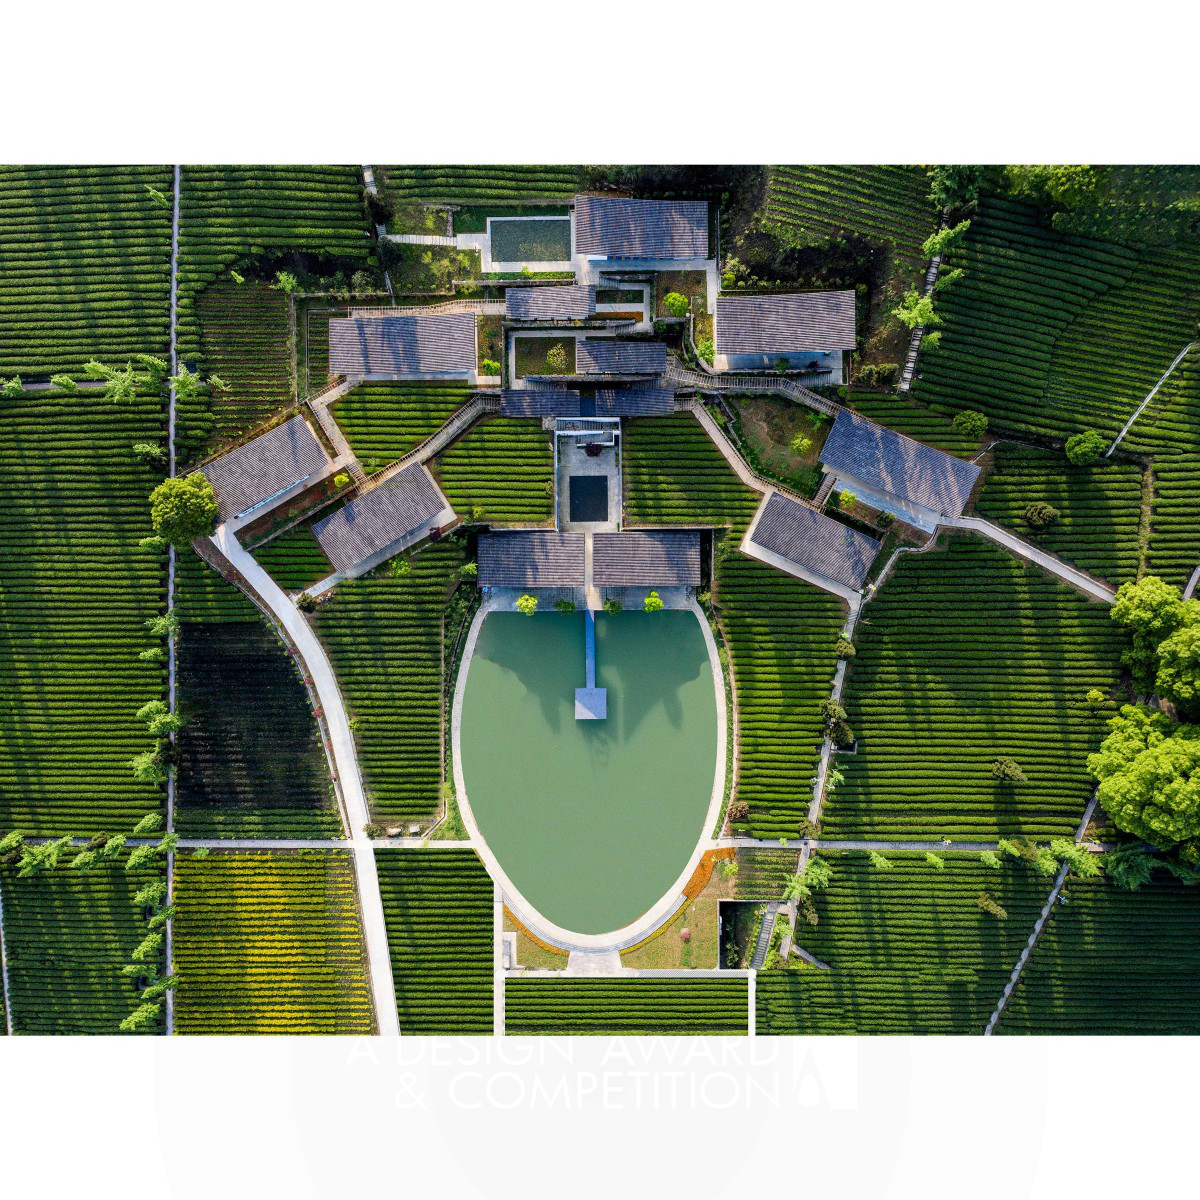 Dingxin Tea Garden: Um Oásis de Harmonia entre o Homem e a Natureza